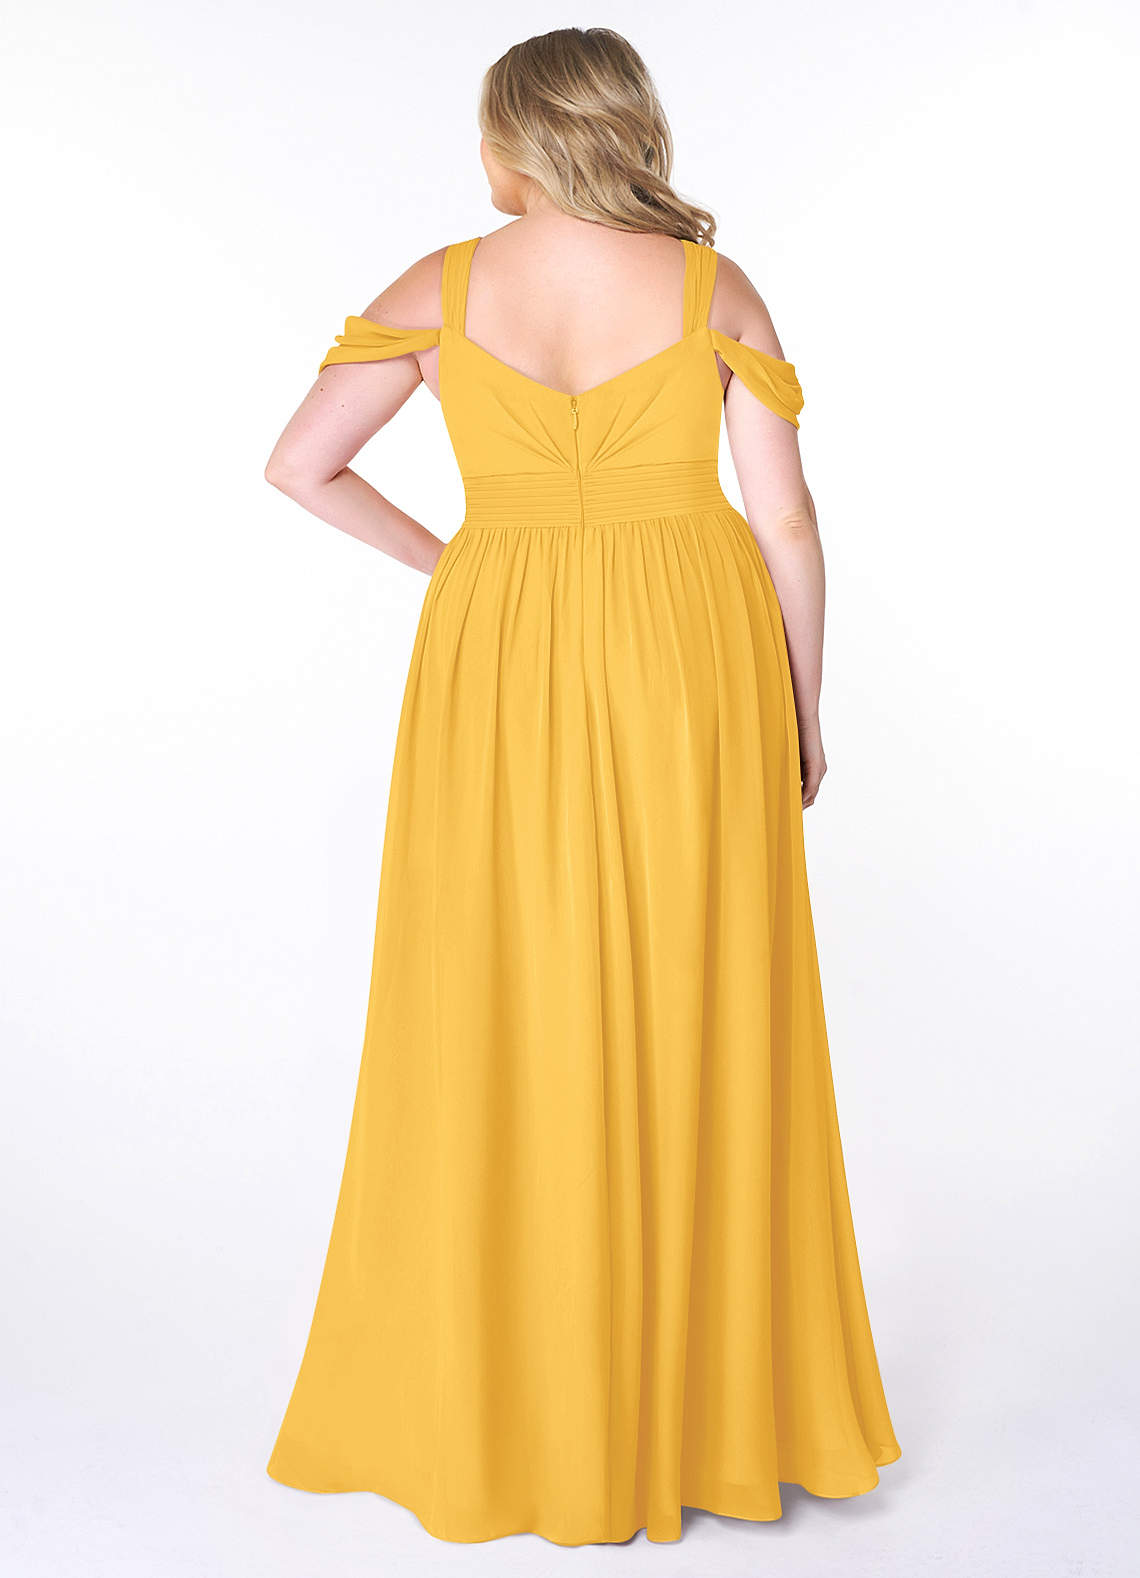 Azazie Lianne Bridesmaid Dresses A-Line Off the Shoulder Chiffon Floor-Length Dress image1